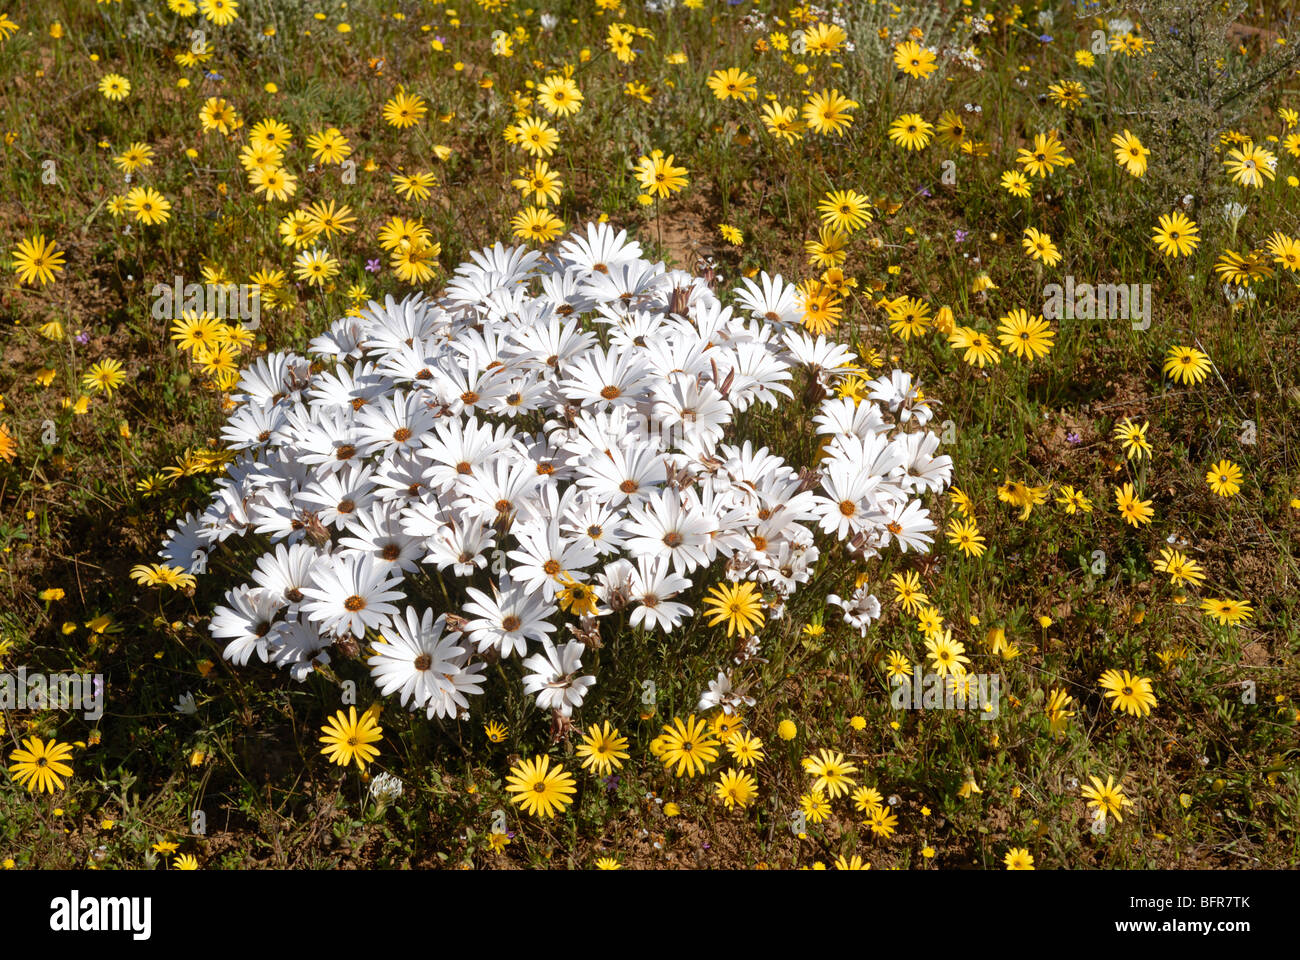 White Dimorphotheca daisies amongst yellow daisies Stock Photo